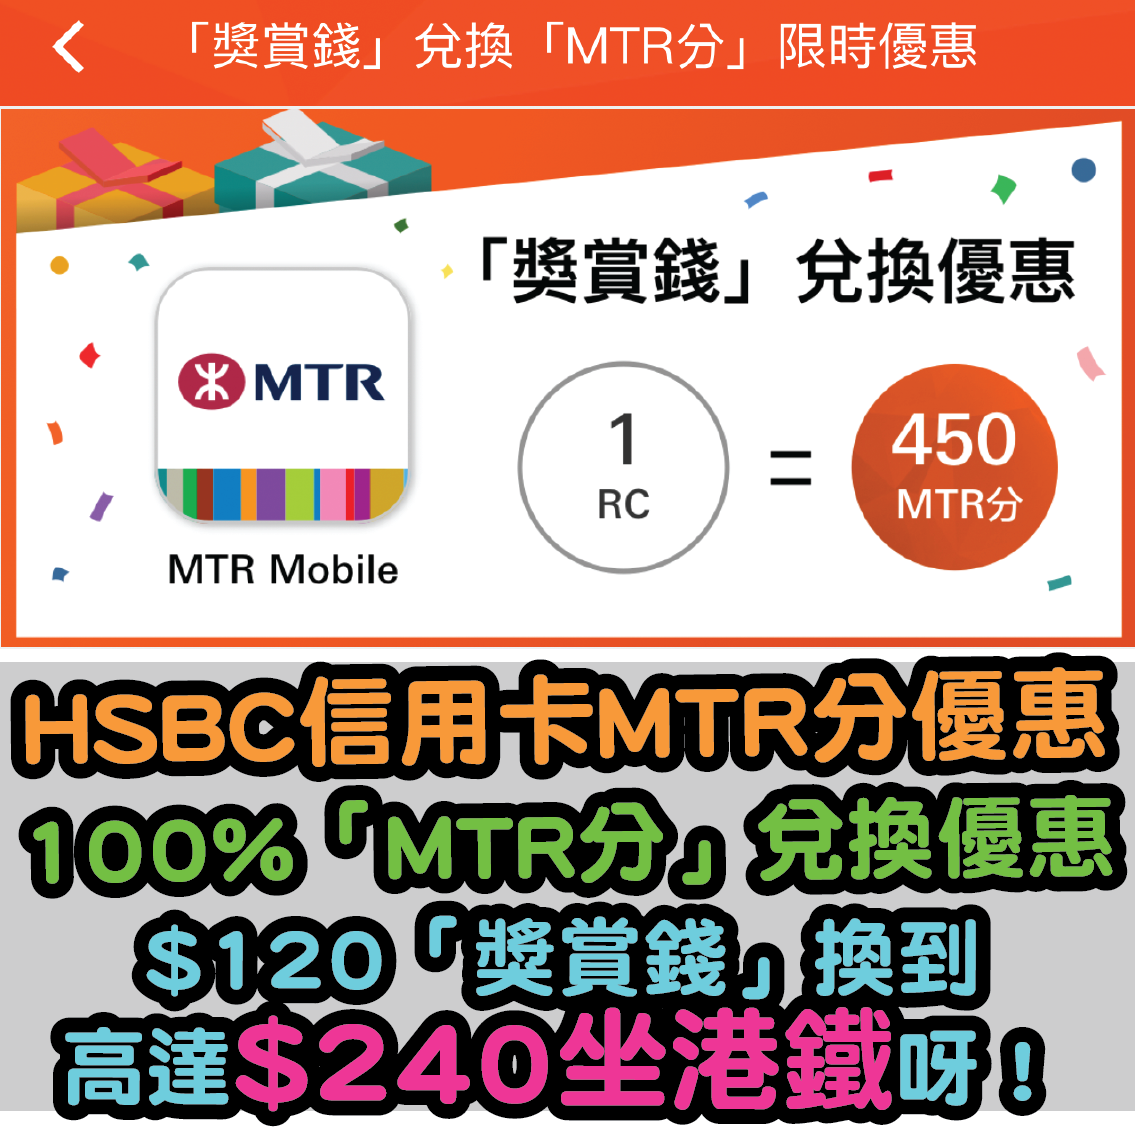 【HSBC信用卡MTR分優惠】$1「獎賞錢」= 450「MTR 分」！首次經 Reward+ 成功以$10或以上「獎賞錢」兌換MTR分，再獲贈一次港鐵免費本地車程！